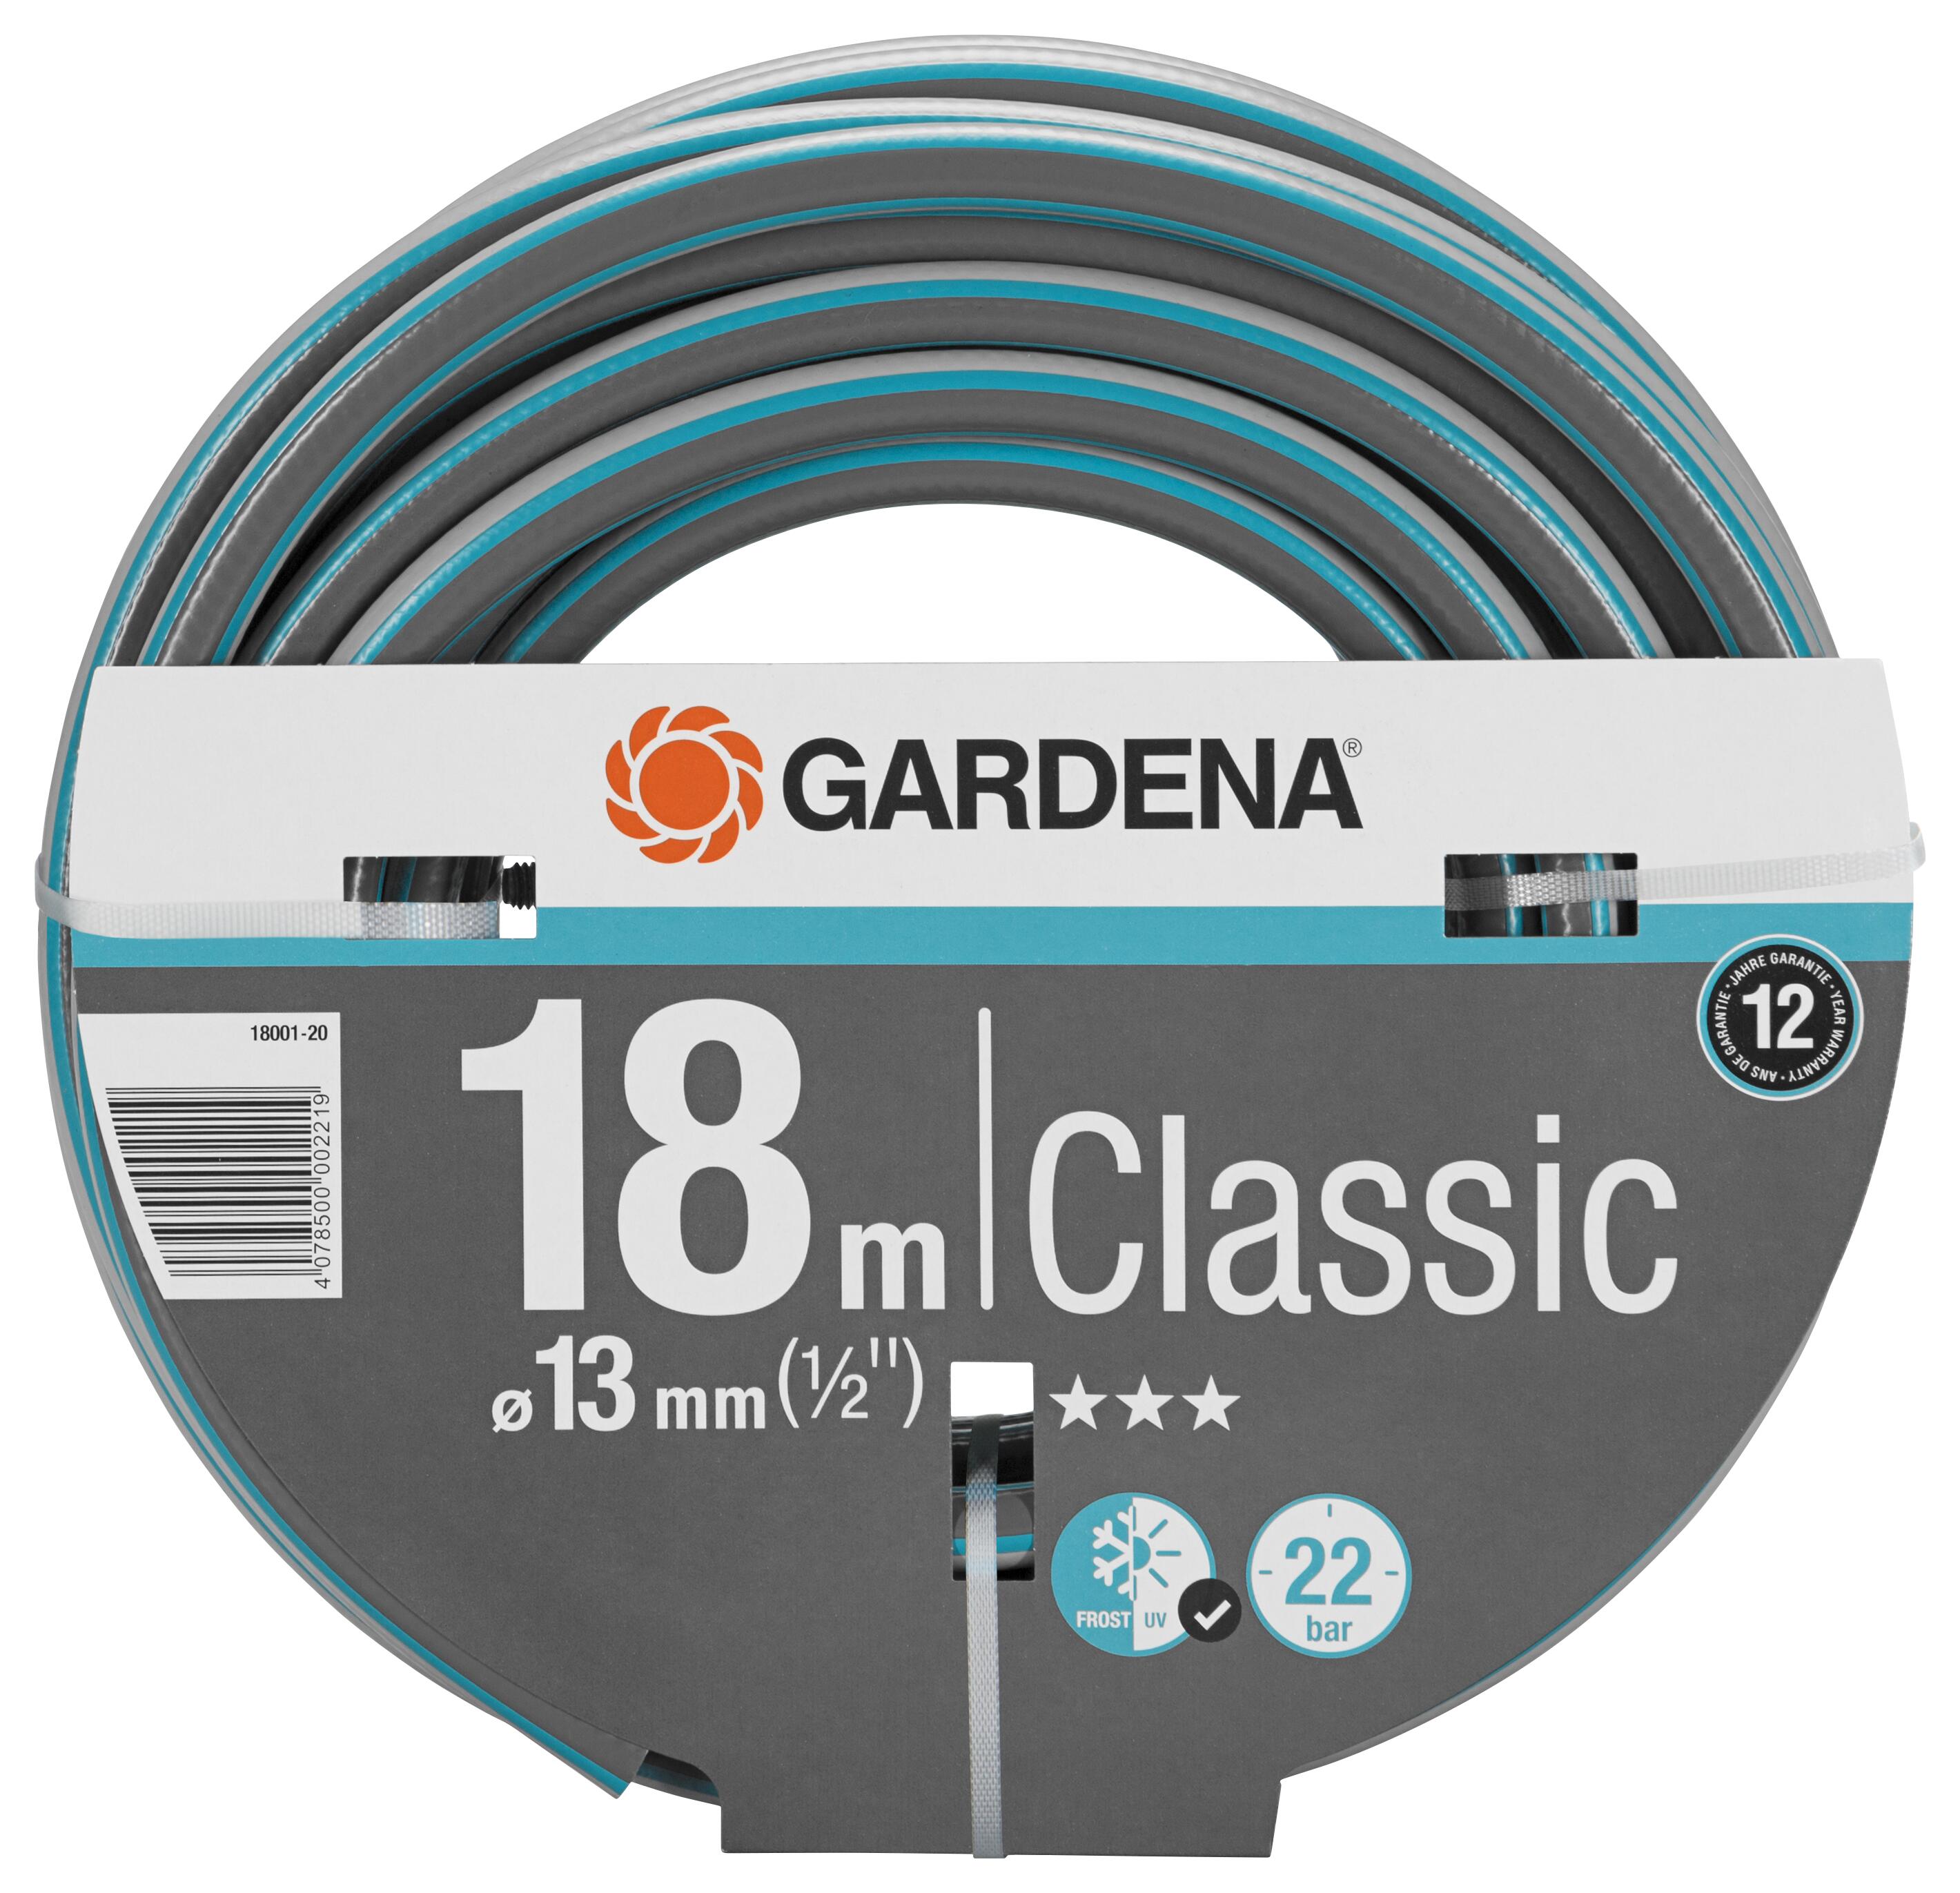 Gardena 18002-20 hadice Classic 13 mm (1/2), 18 m bez arm.